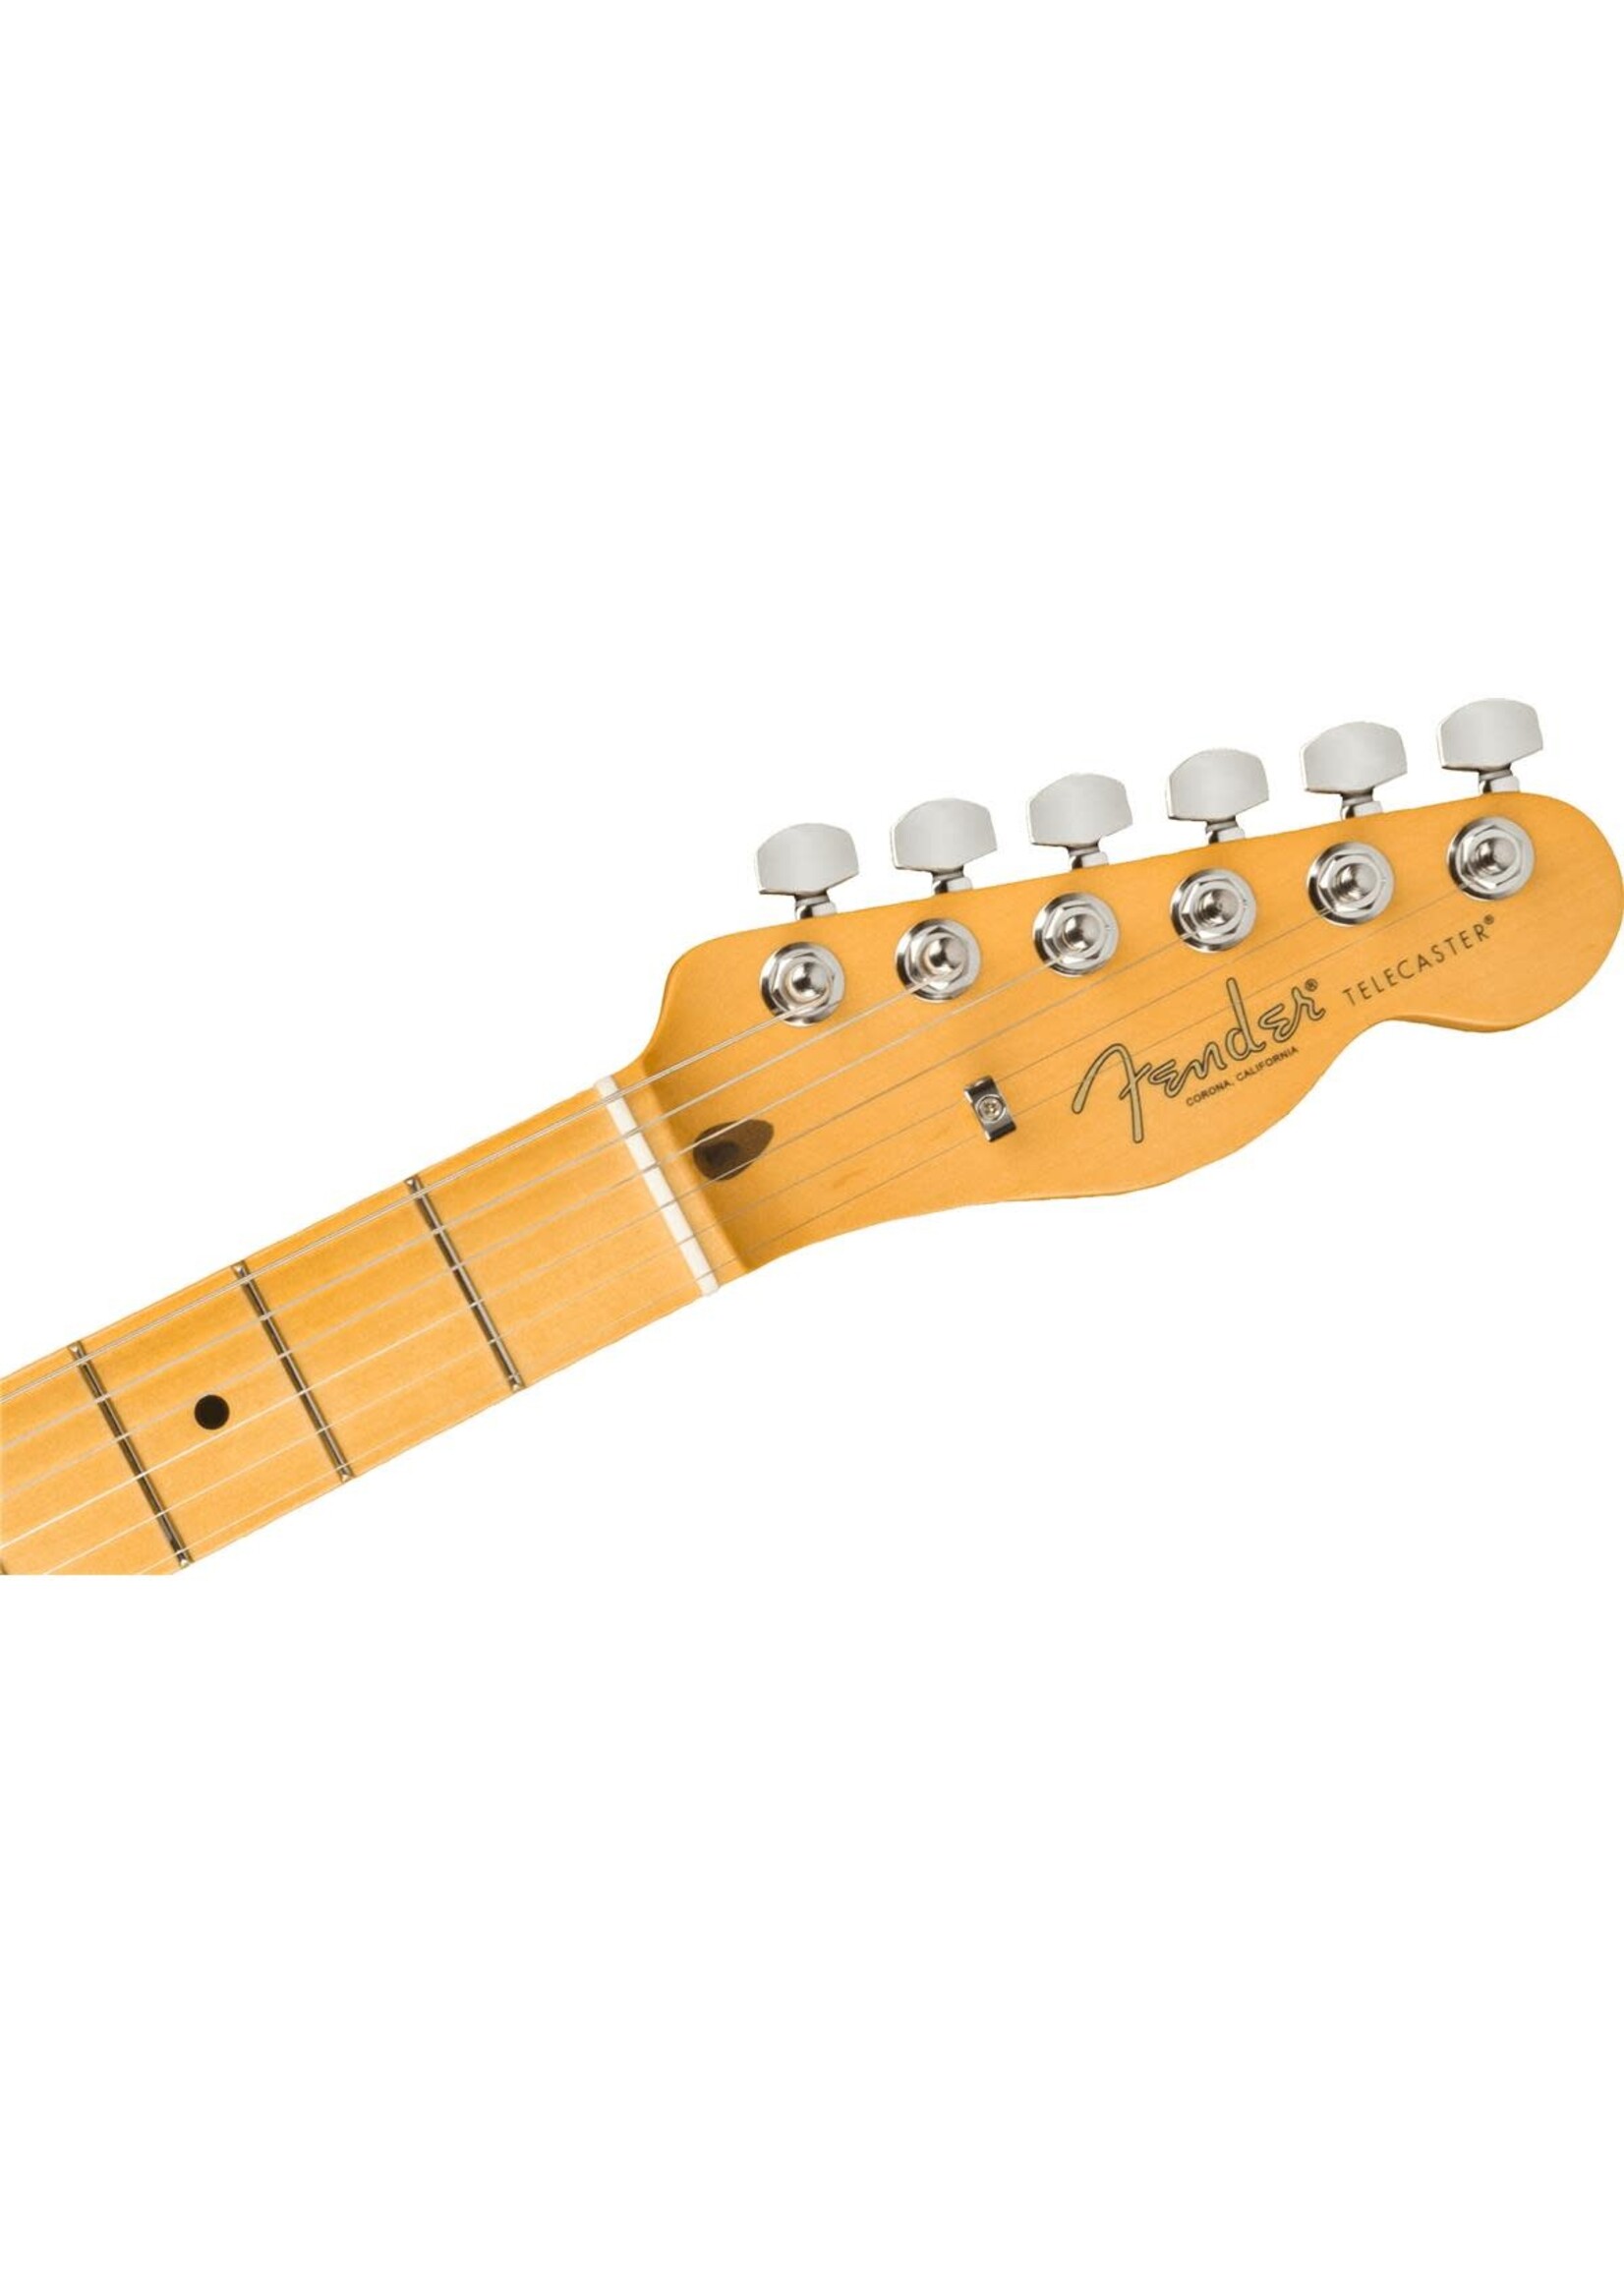 Fender Fender 0113942750 American Professional II Telecaster - Butterscotch Blonde